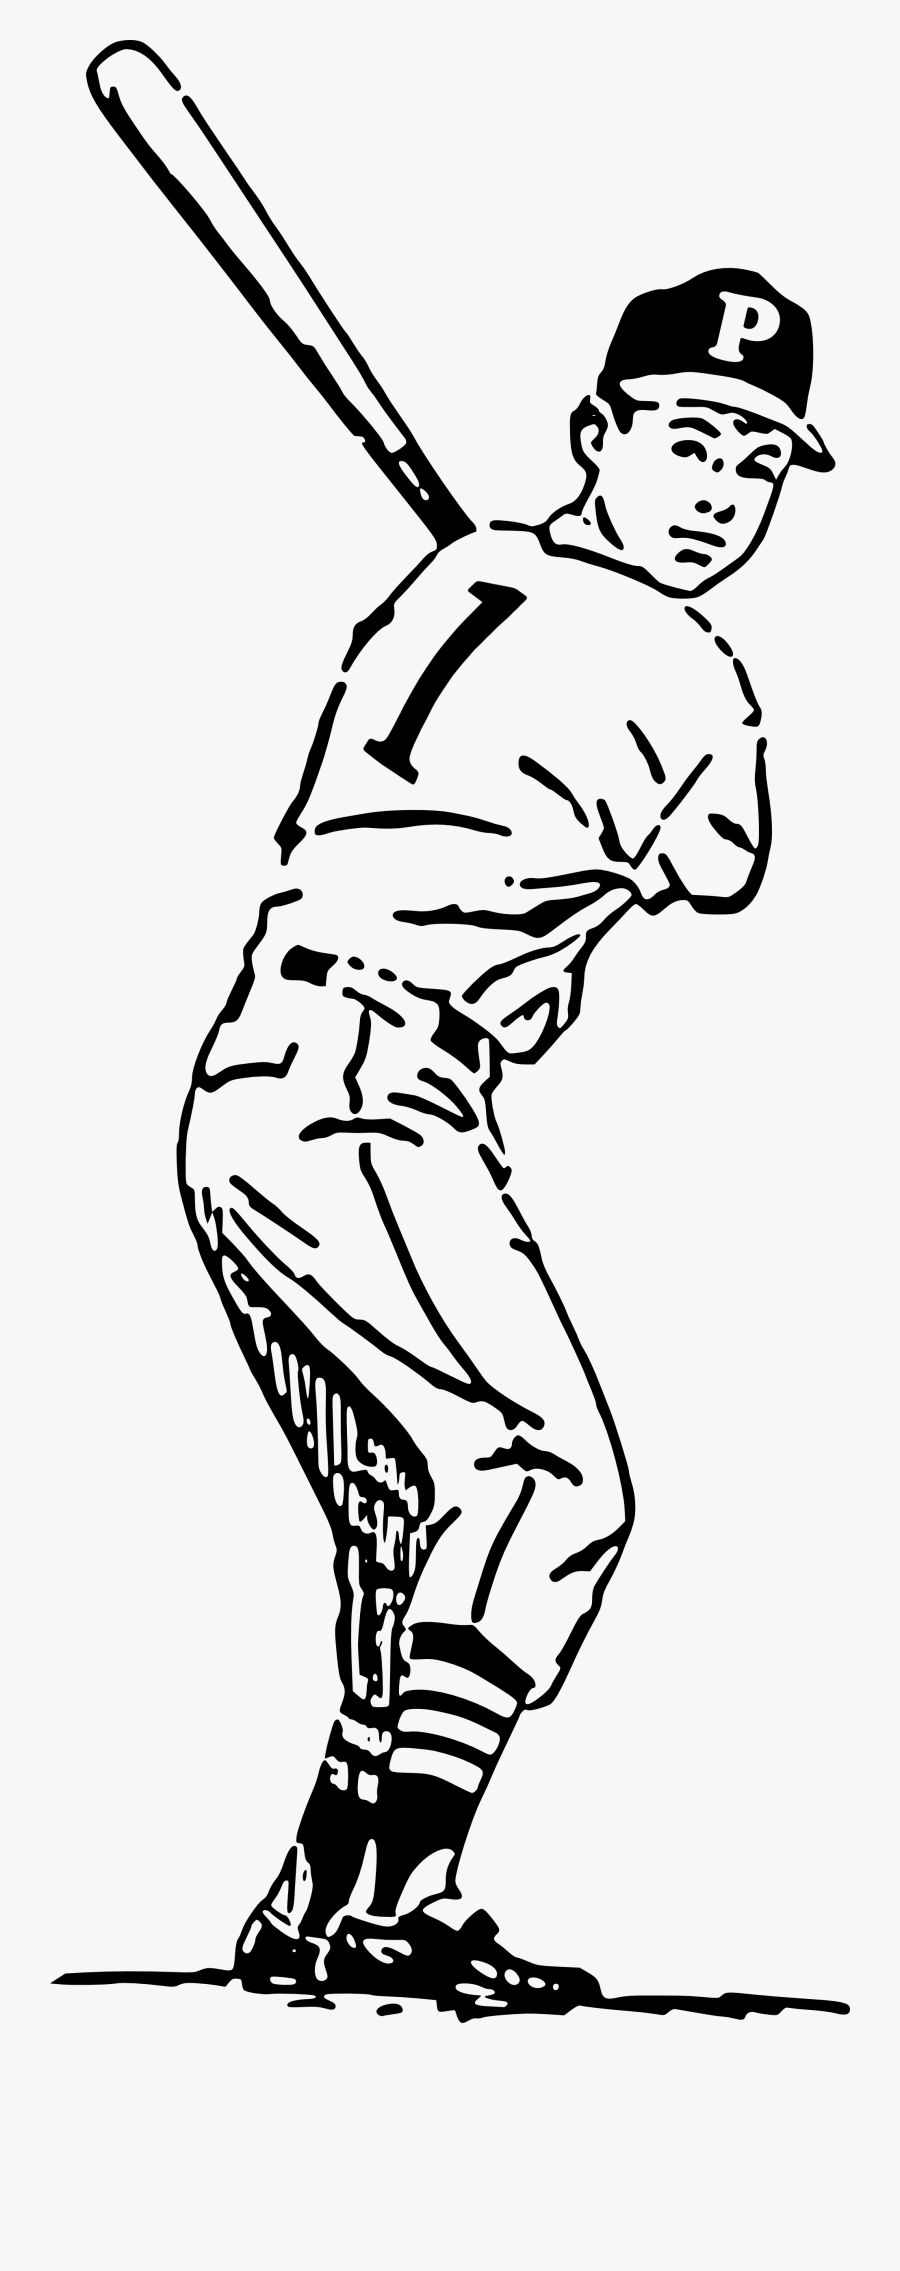 Baseball Player Batter Swinging Home Run Png Hd Hq - Baseball Player Line Art, Transparent Clipart